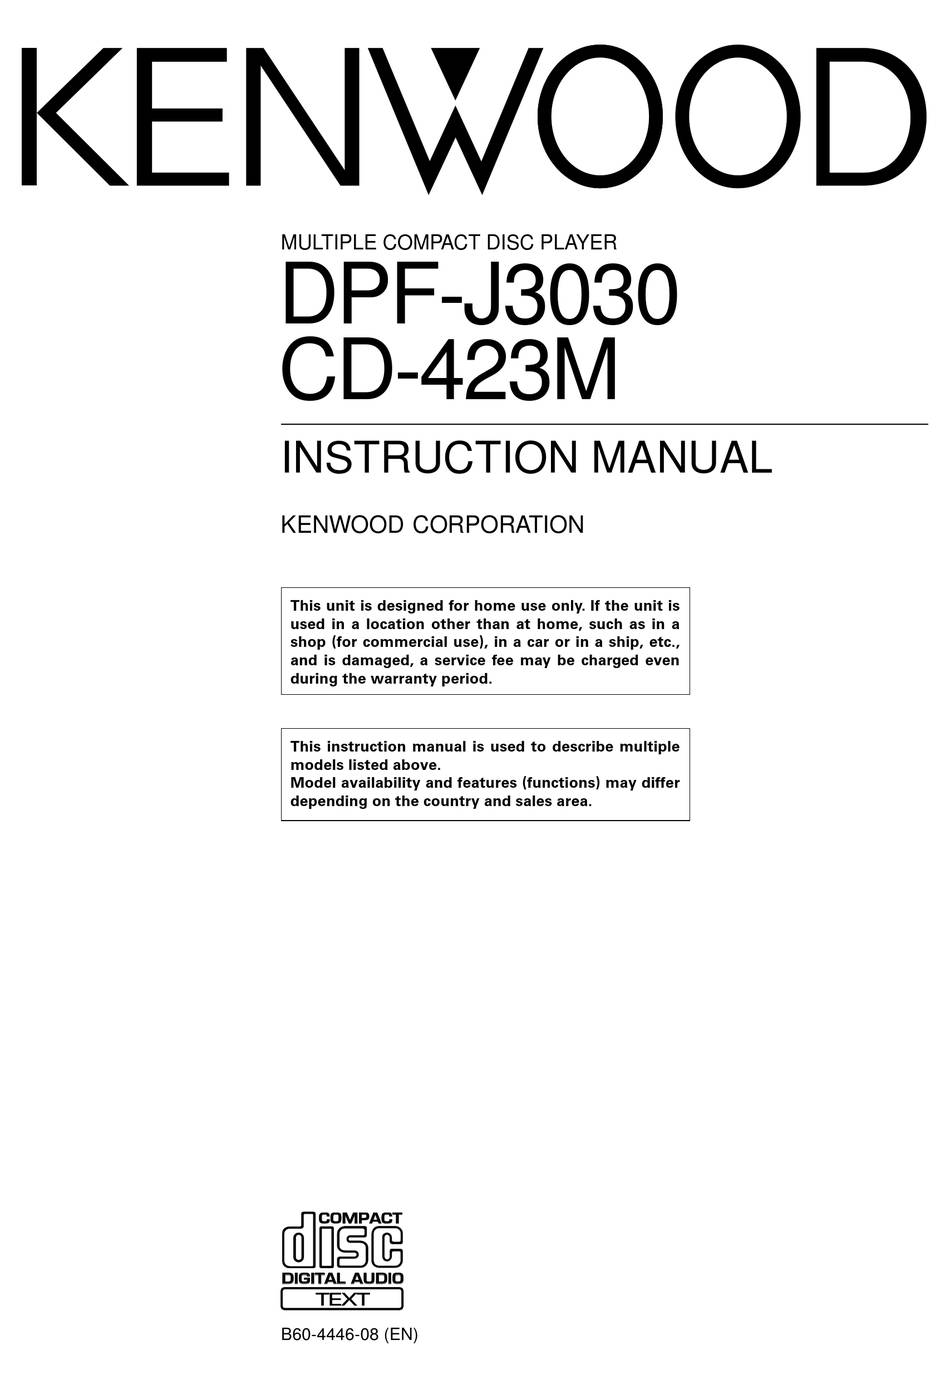 Kenwood DPF-J3030